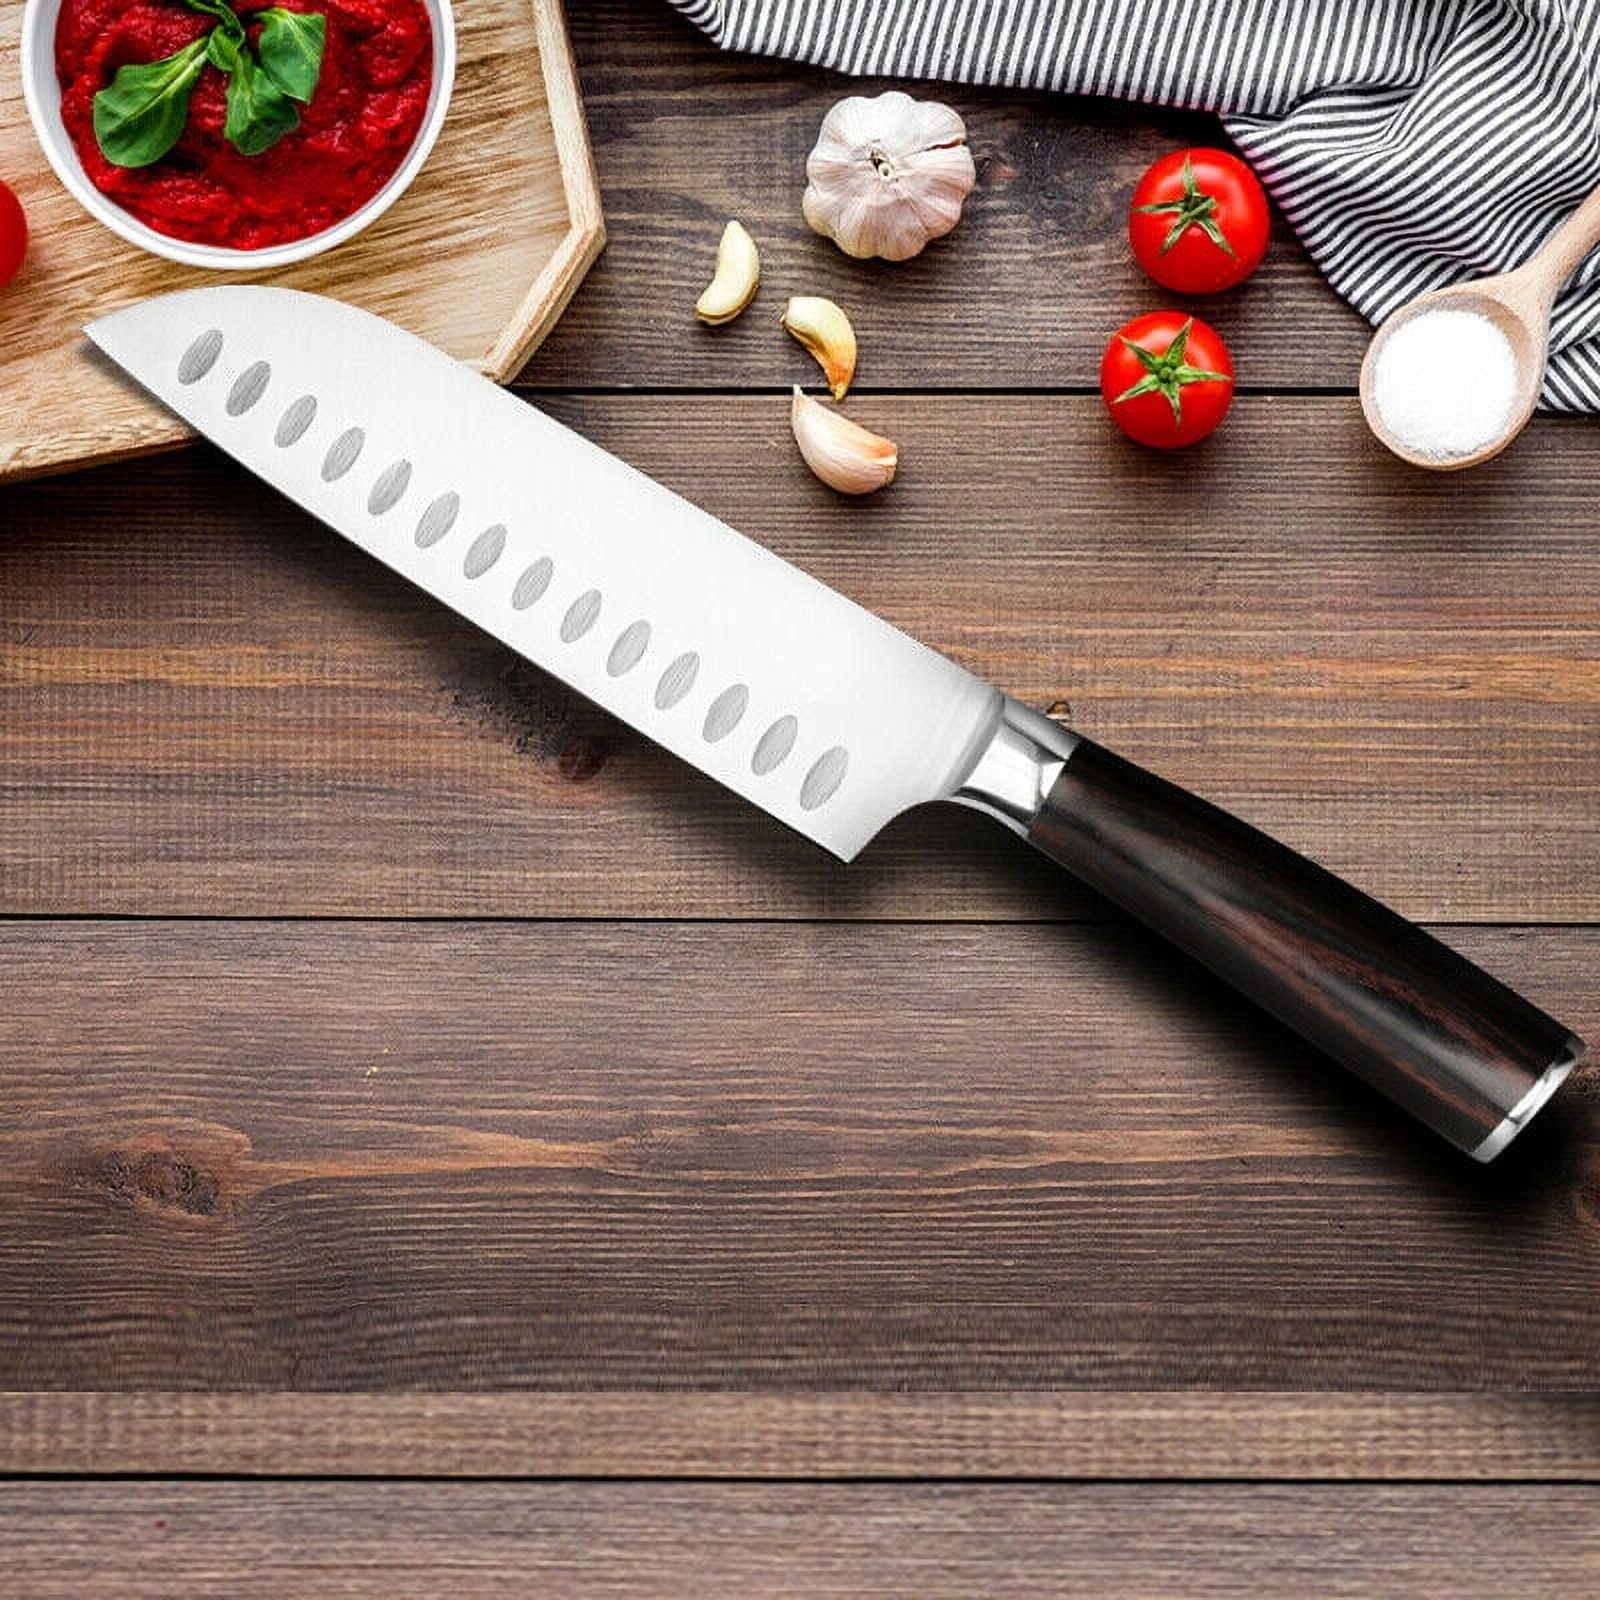 WALLOP Paring Knife - Fruit Peeling Knife 3.5 inch - Razor Sharp German  1.4116 HC Stainless Steel Fruit Vegetable Knife Kitchen Knife - Full Tang